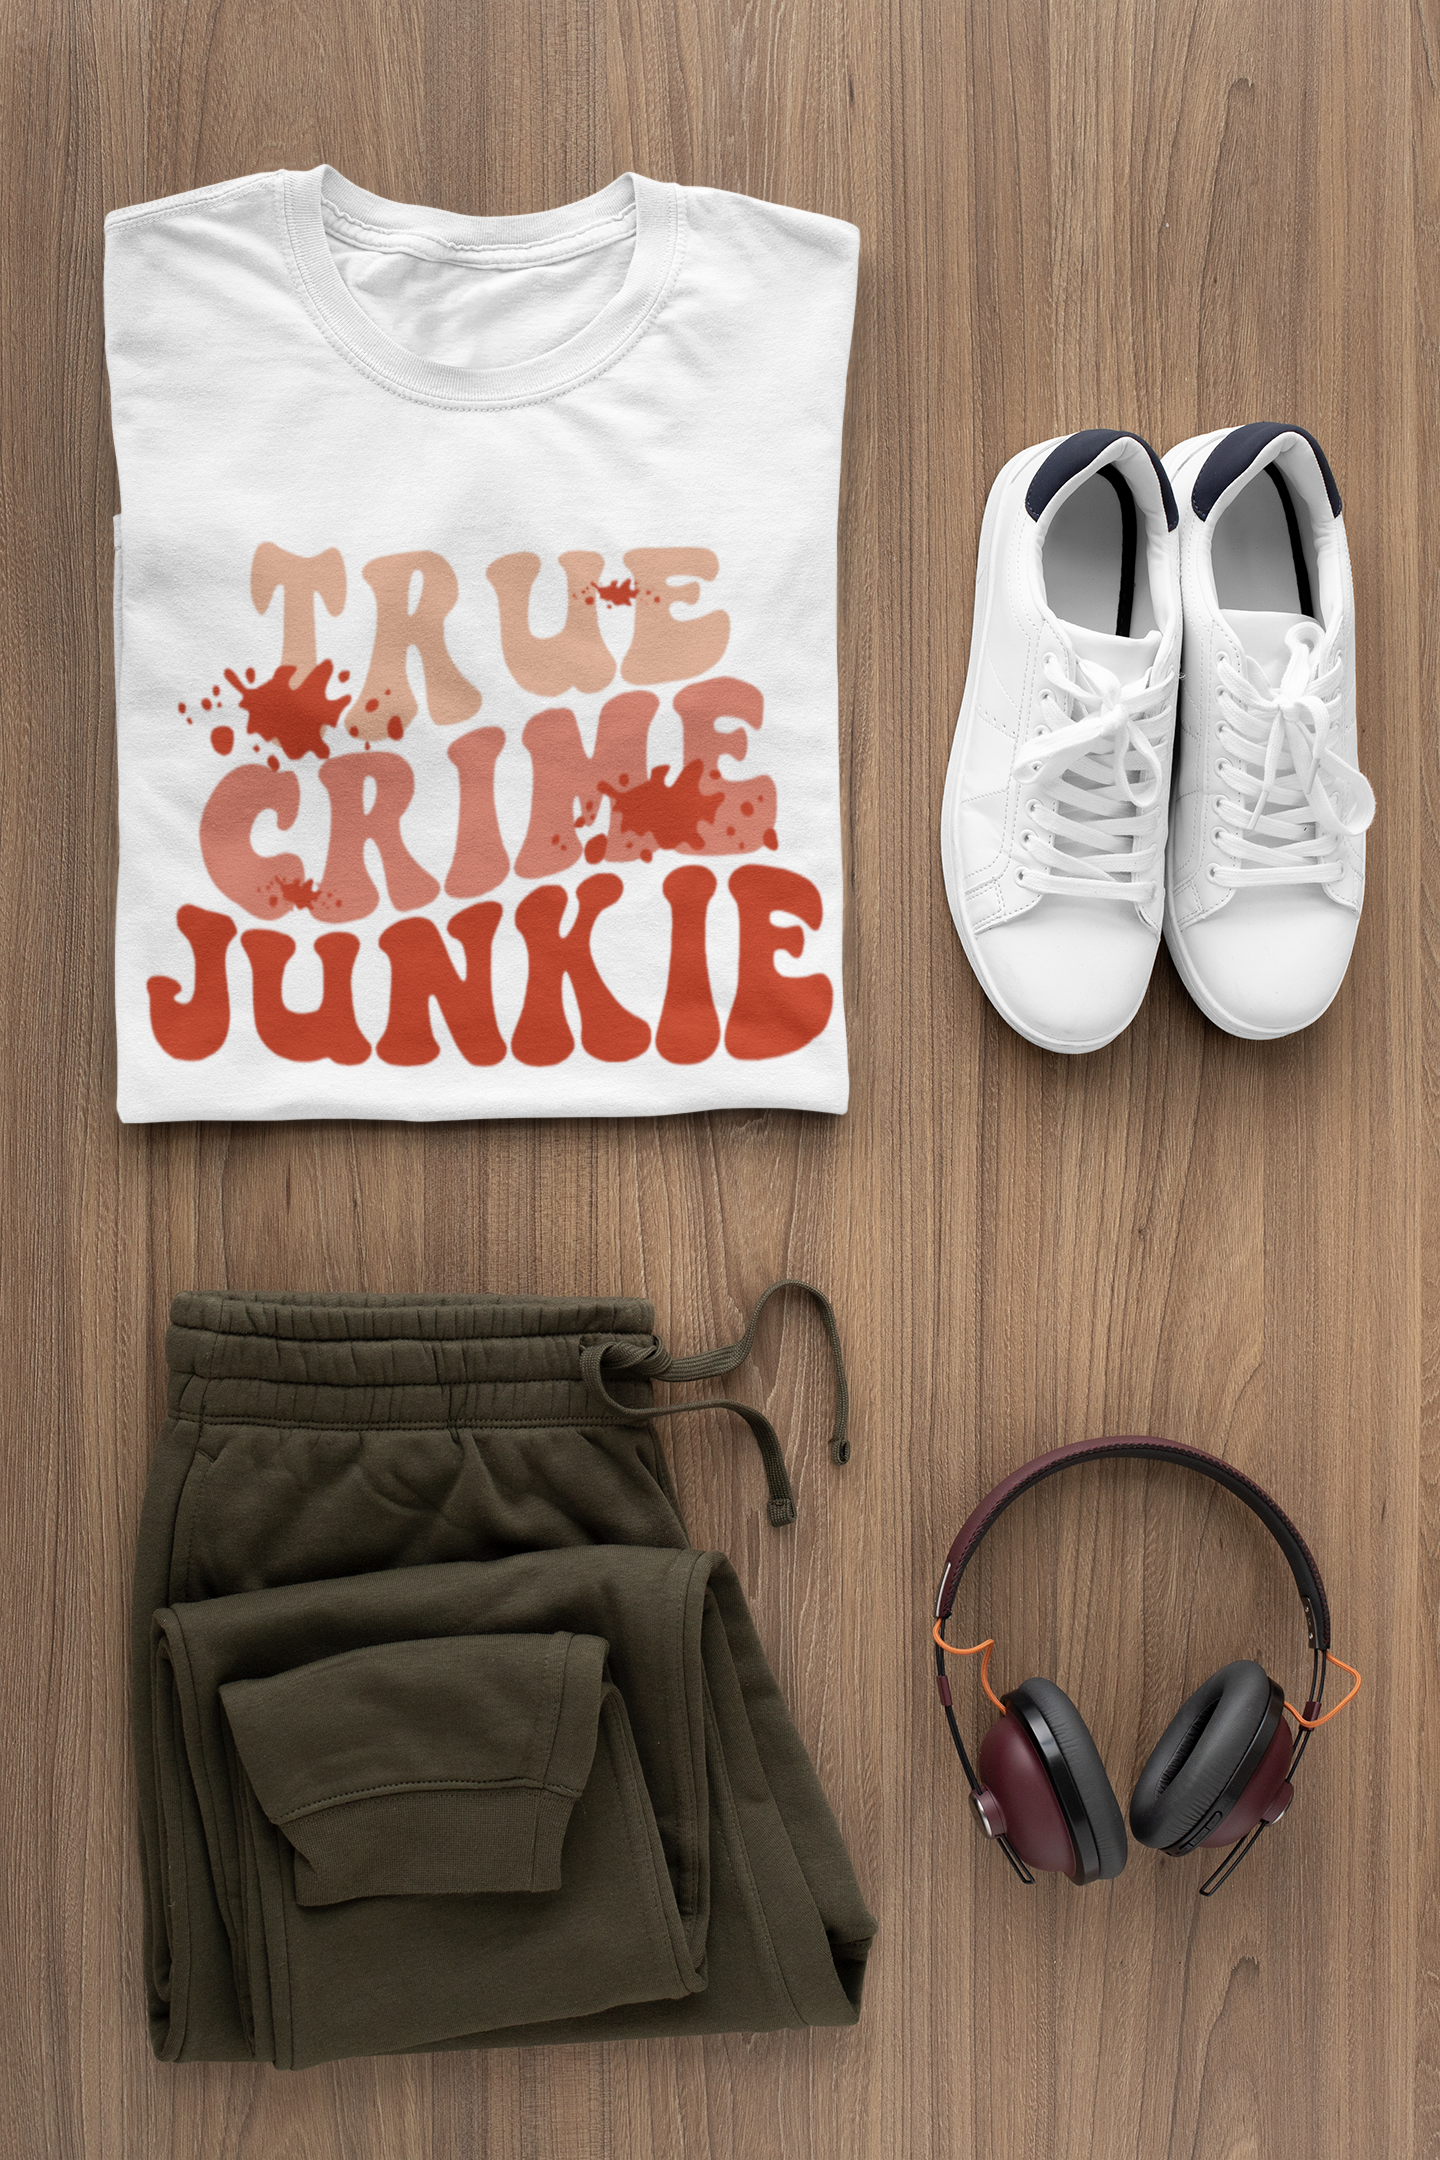 True Crime Junkie- Full Color Heat Transfer